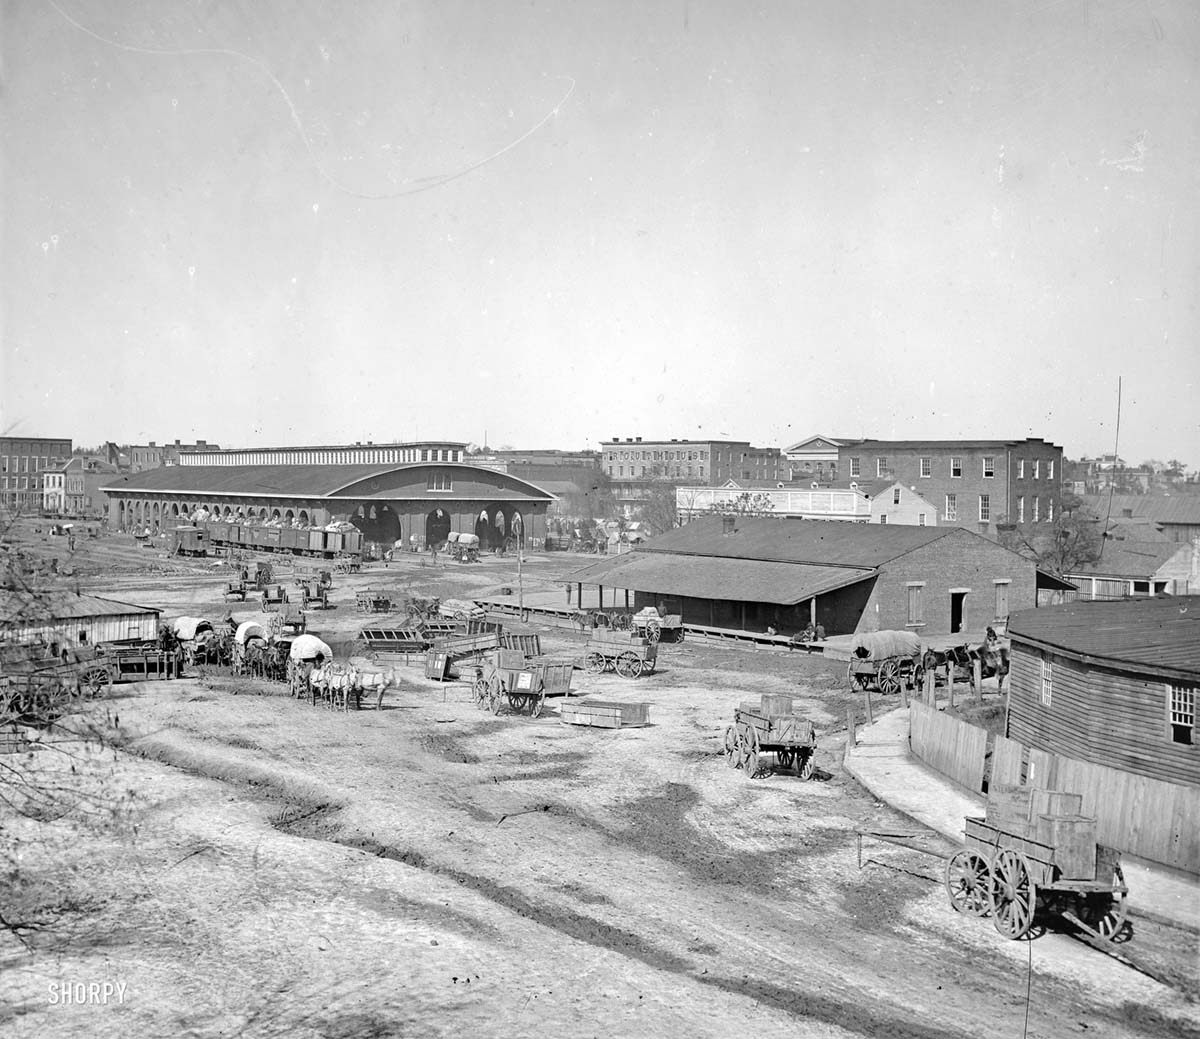 Atlanta, Georgia. Railroad depot and yard